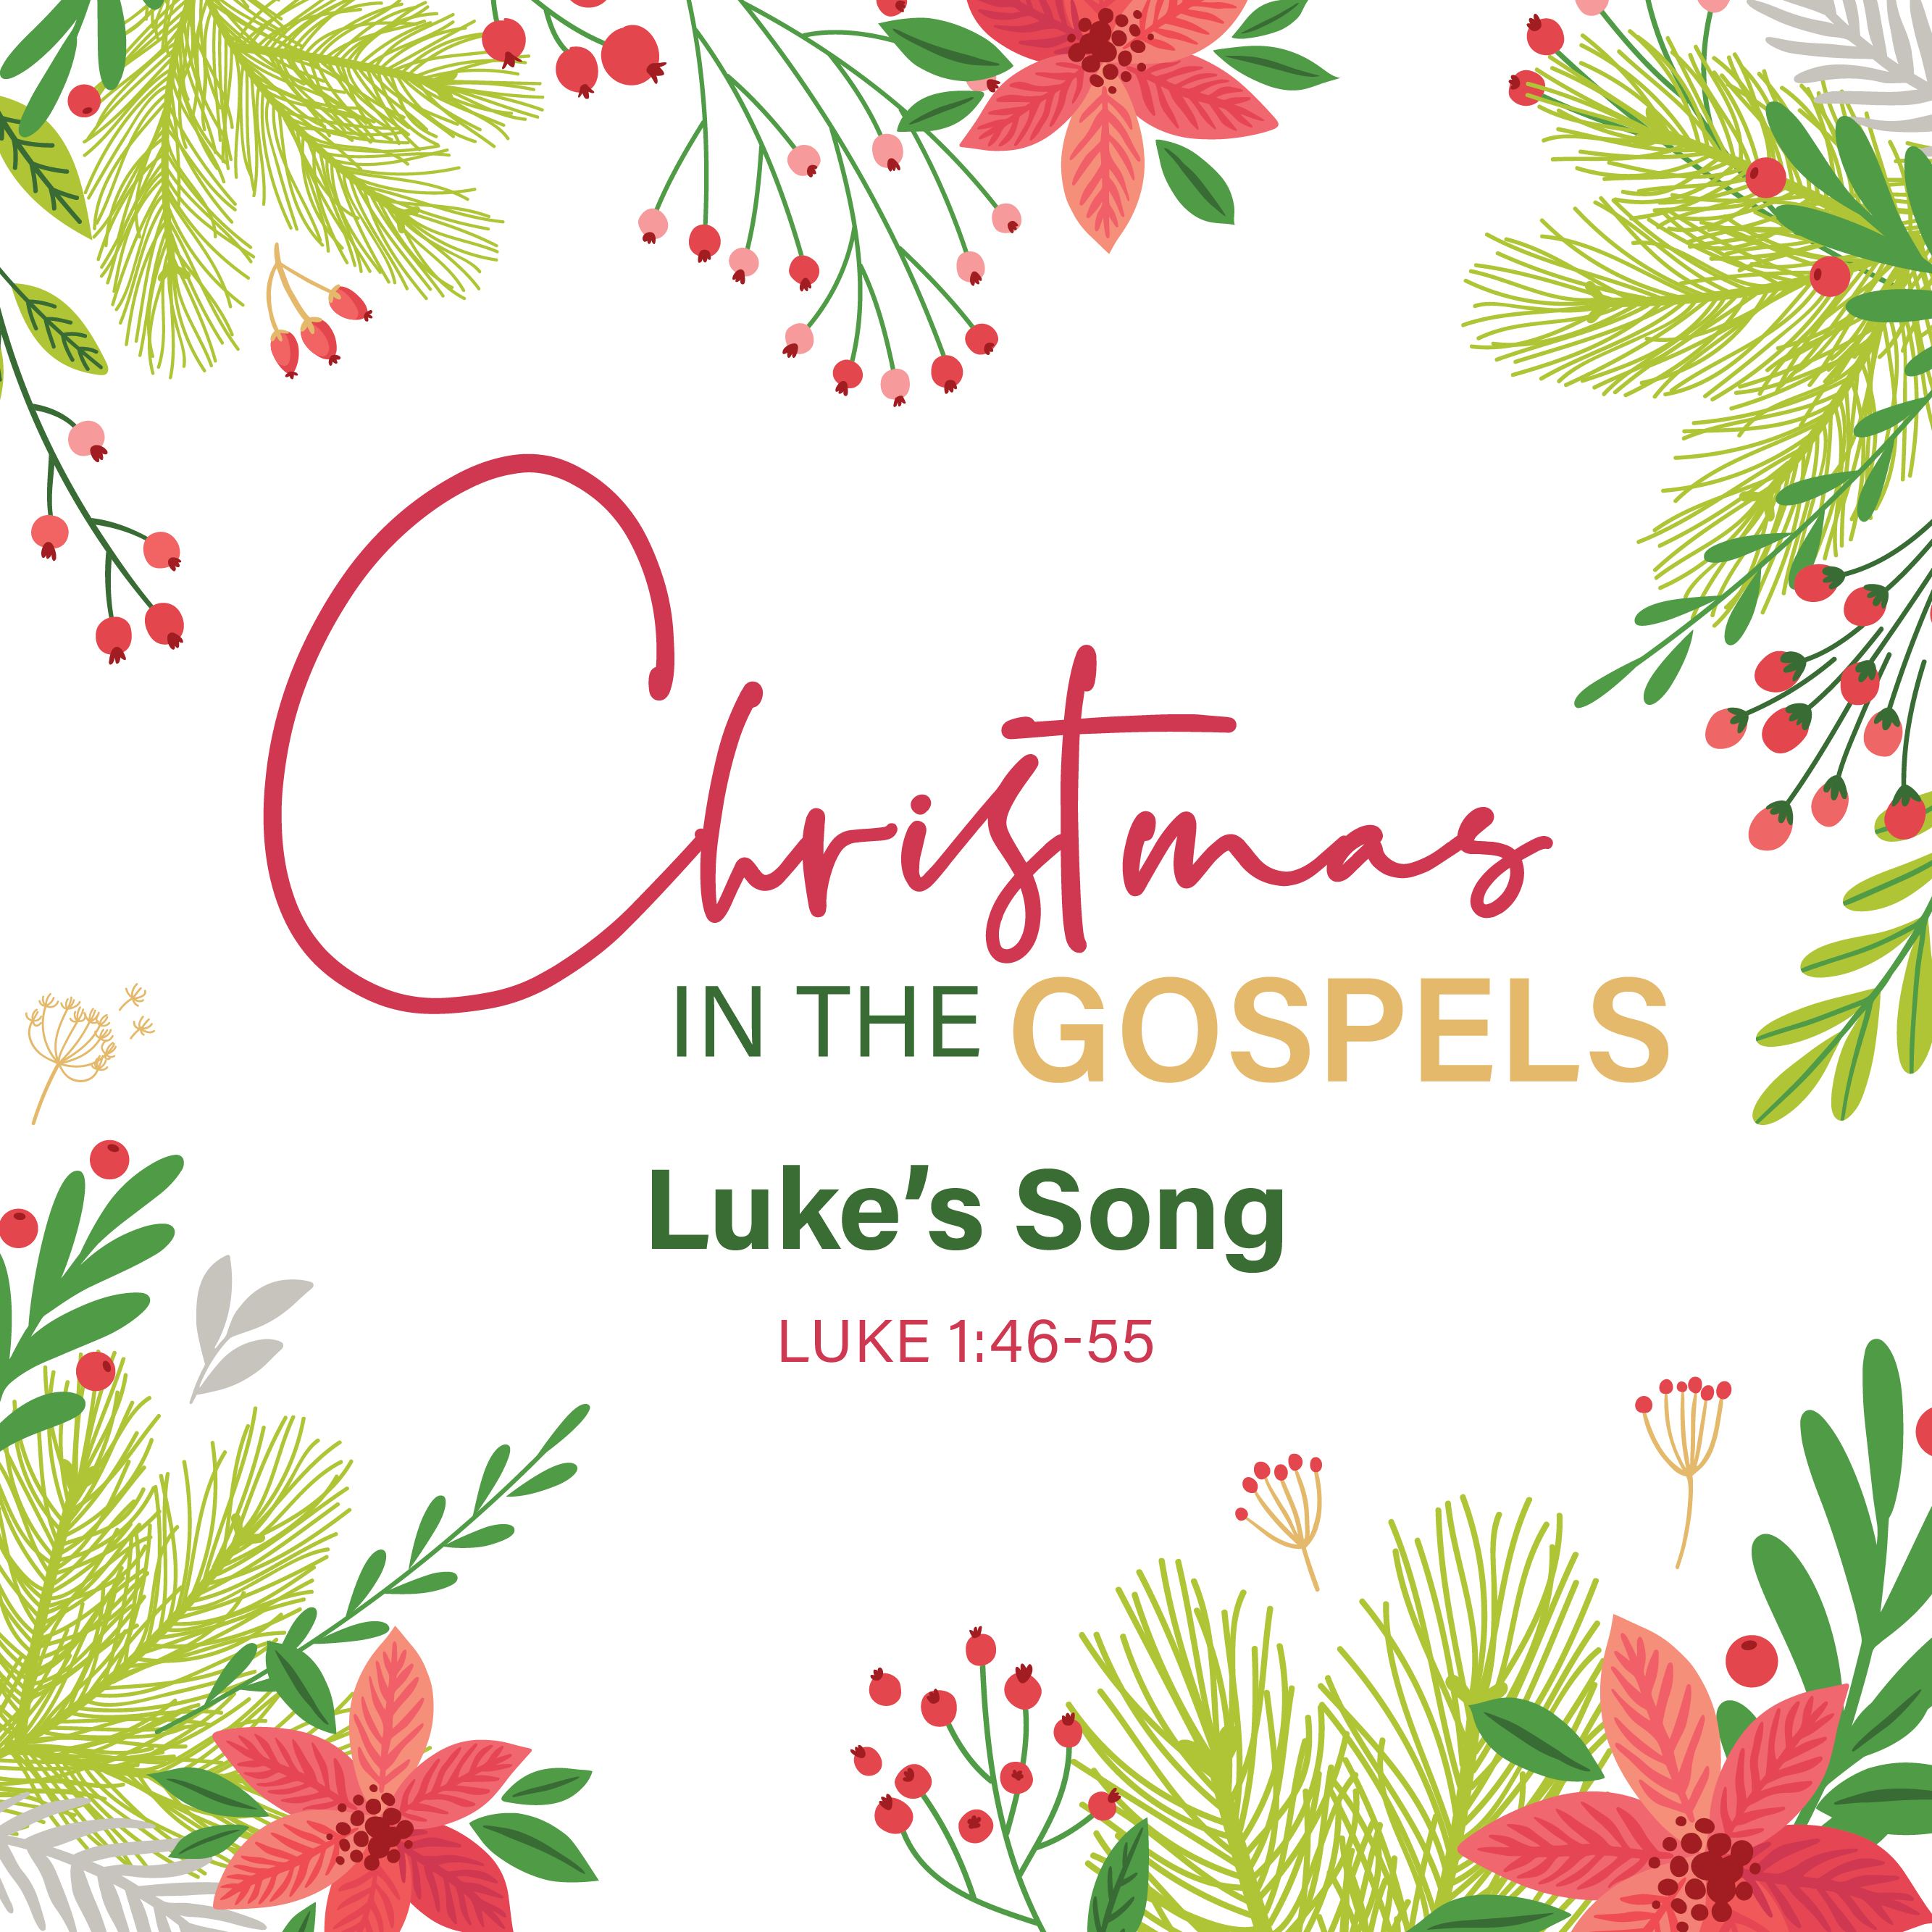 Sunday, December 17
9 & 11 AM Sanctuary Worship
*No 8:15 Chapel service

Christmas in the Gospels: Luke's Song
